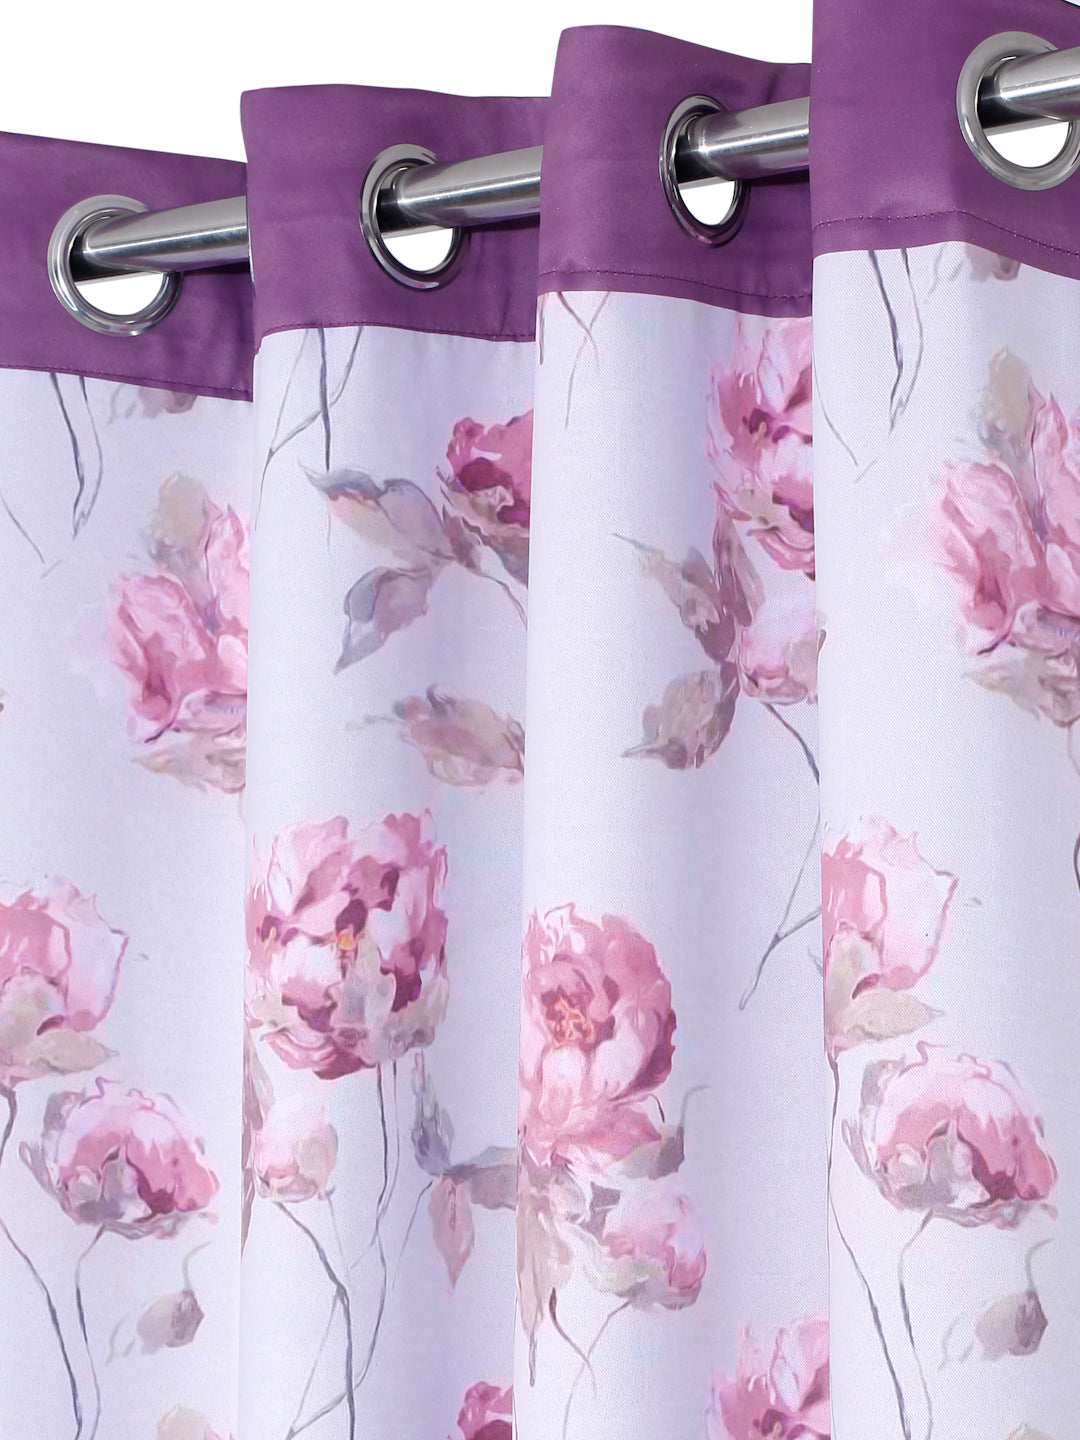 Reversible Floral Printed Blackout Curtains Set of 2- Purple